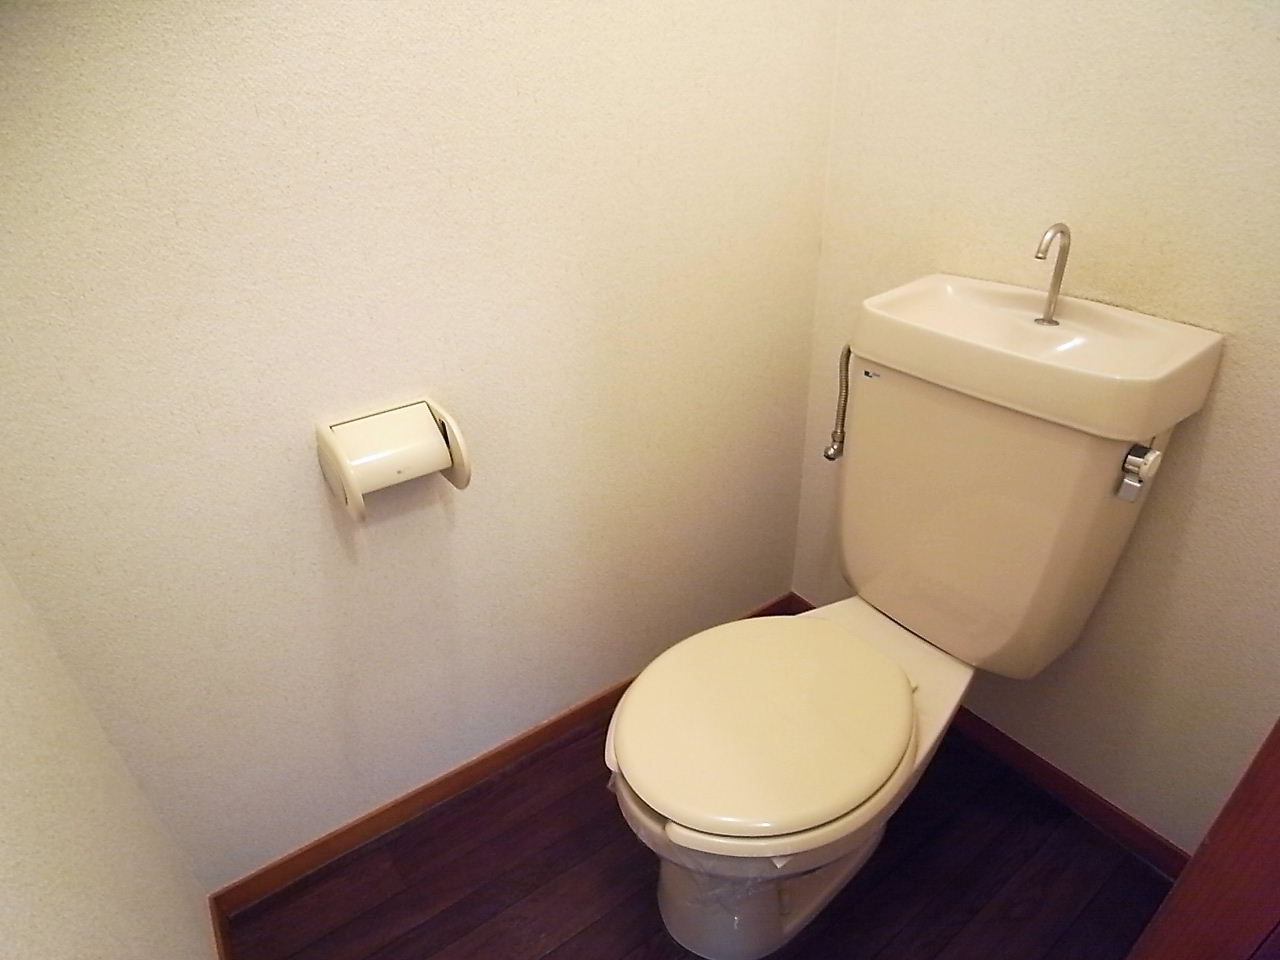 Toilet.  ※ Isomorphic type reference photograph